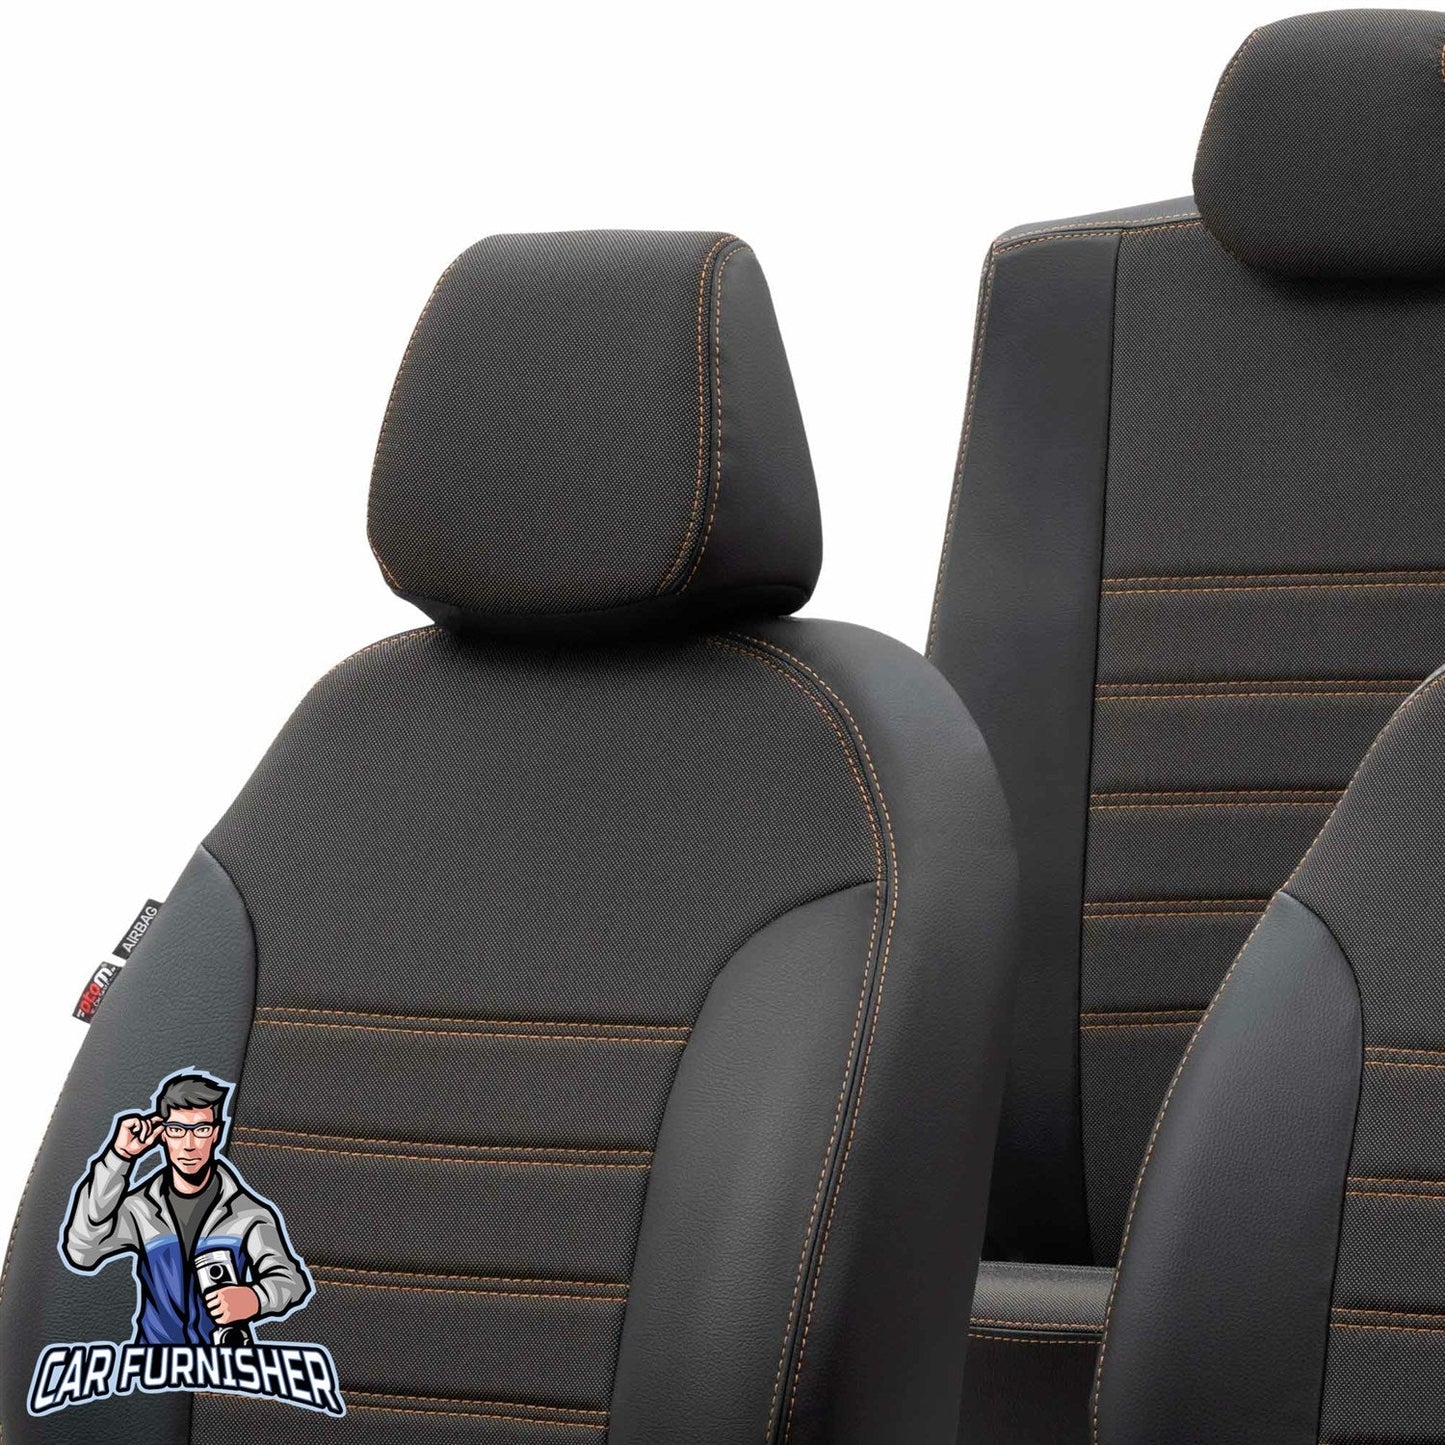 Volkswagen Passat Seat Cover Paris Leather & Jacquard Design Beige Leather & Jacquard Fabric